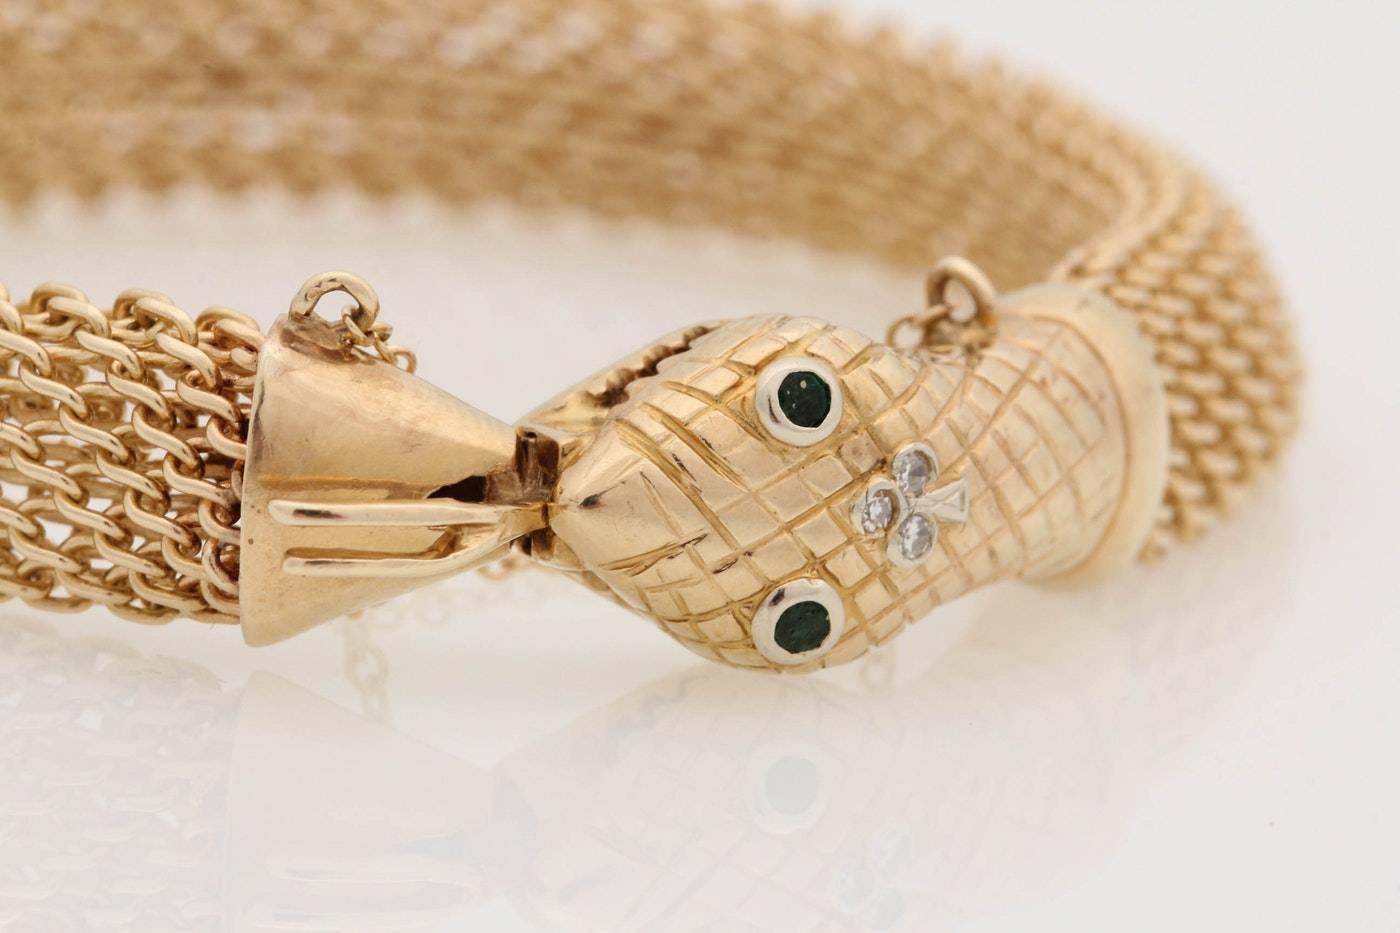 14-Karat Gold Snake Bracelet with Emerald Eyes and Diamonds For Sale 4